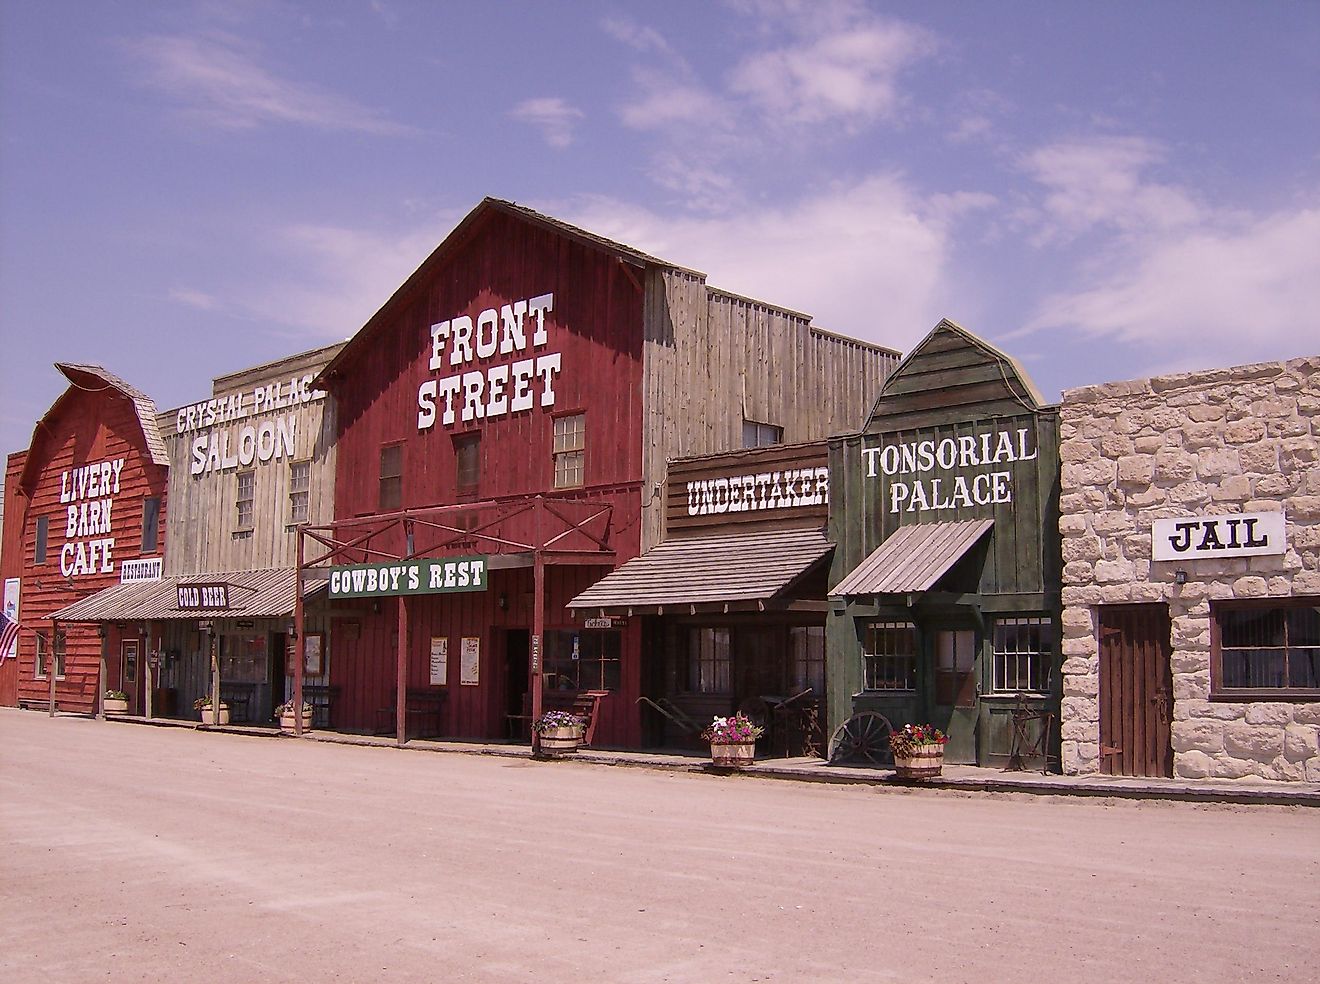 Stores on Front Street in Ogallala, Nebraska. Image credit: Coemgenus via Wikimedia Commons.